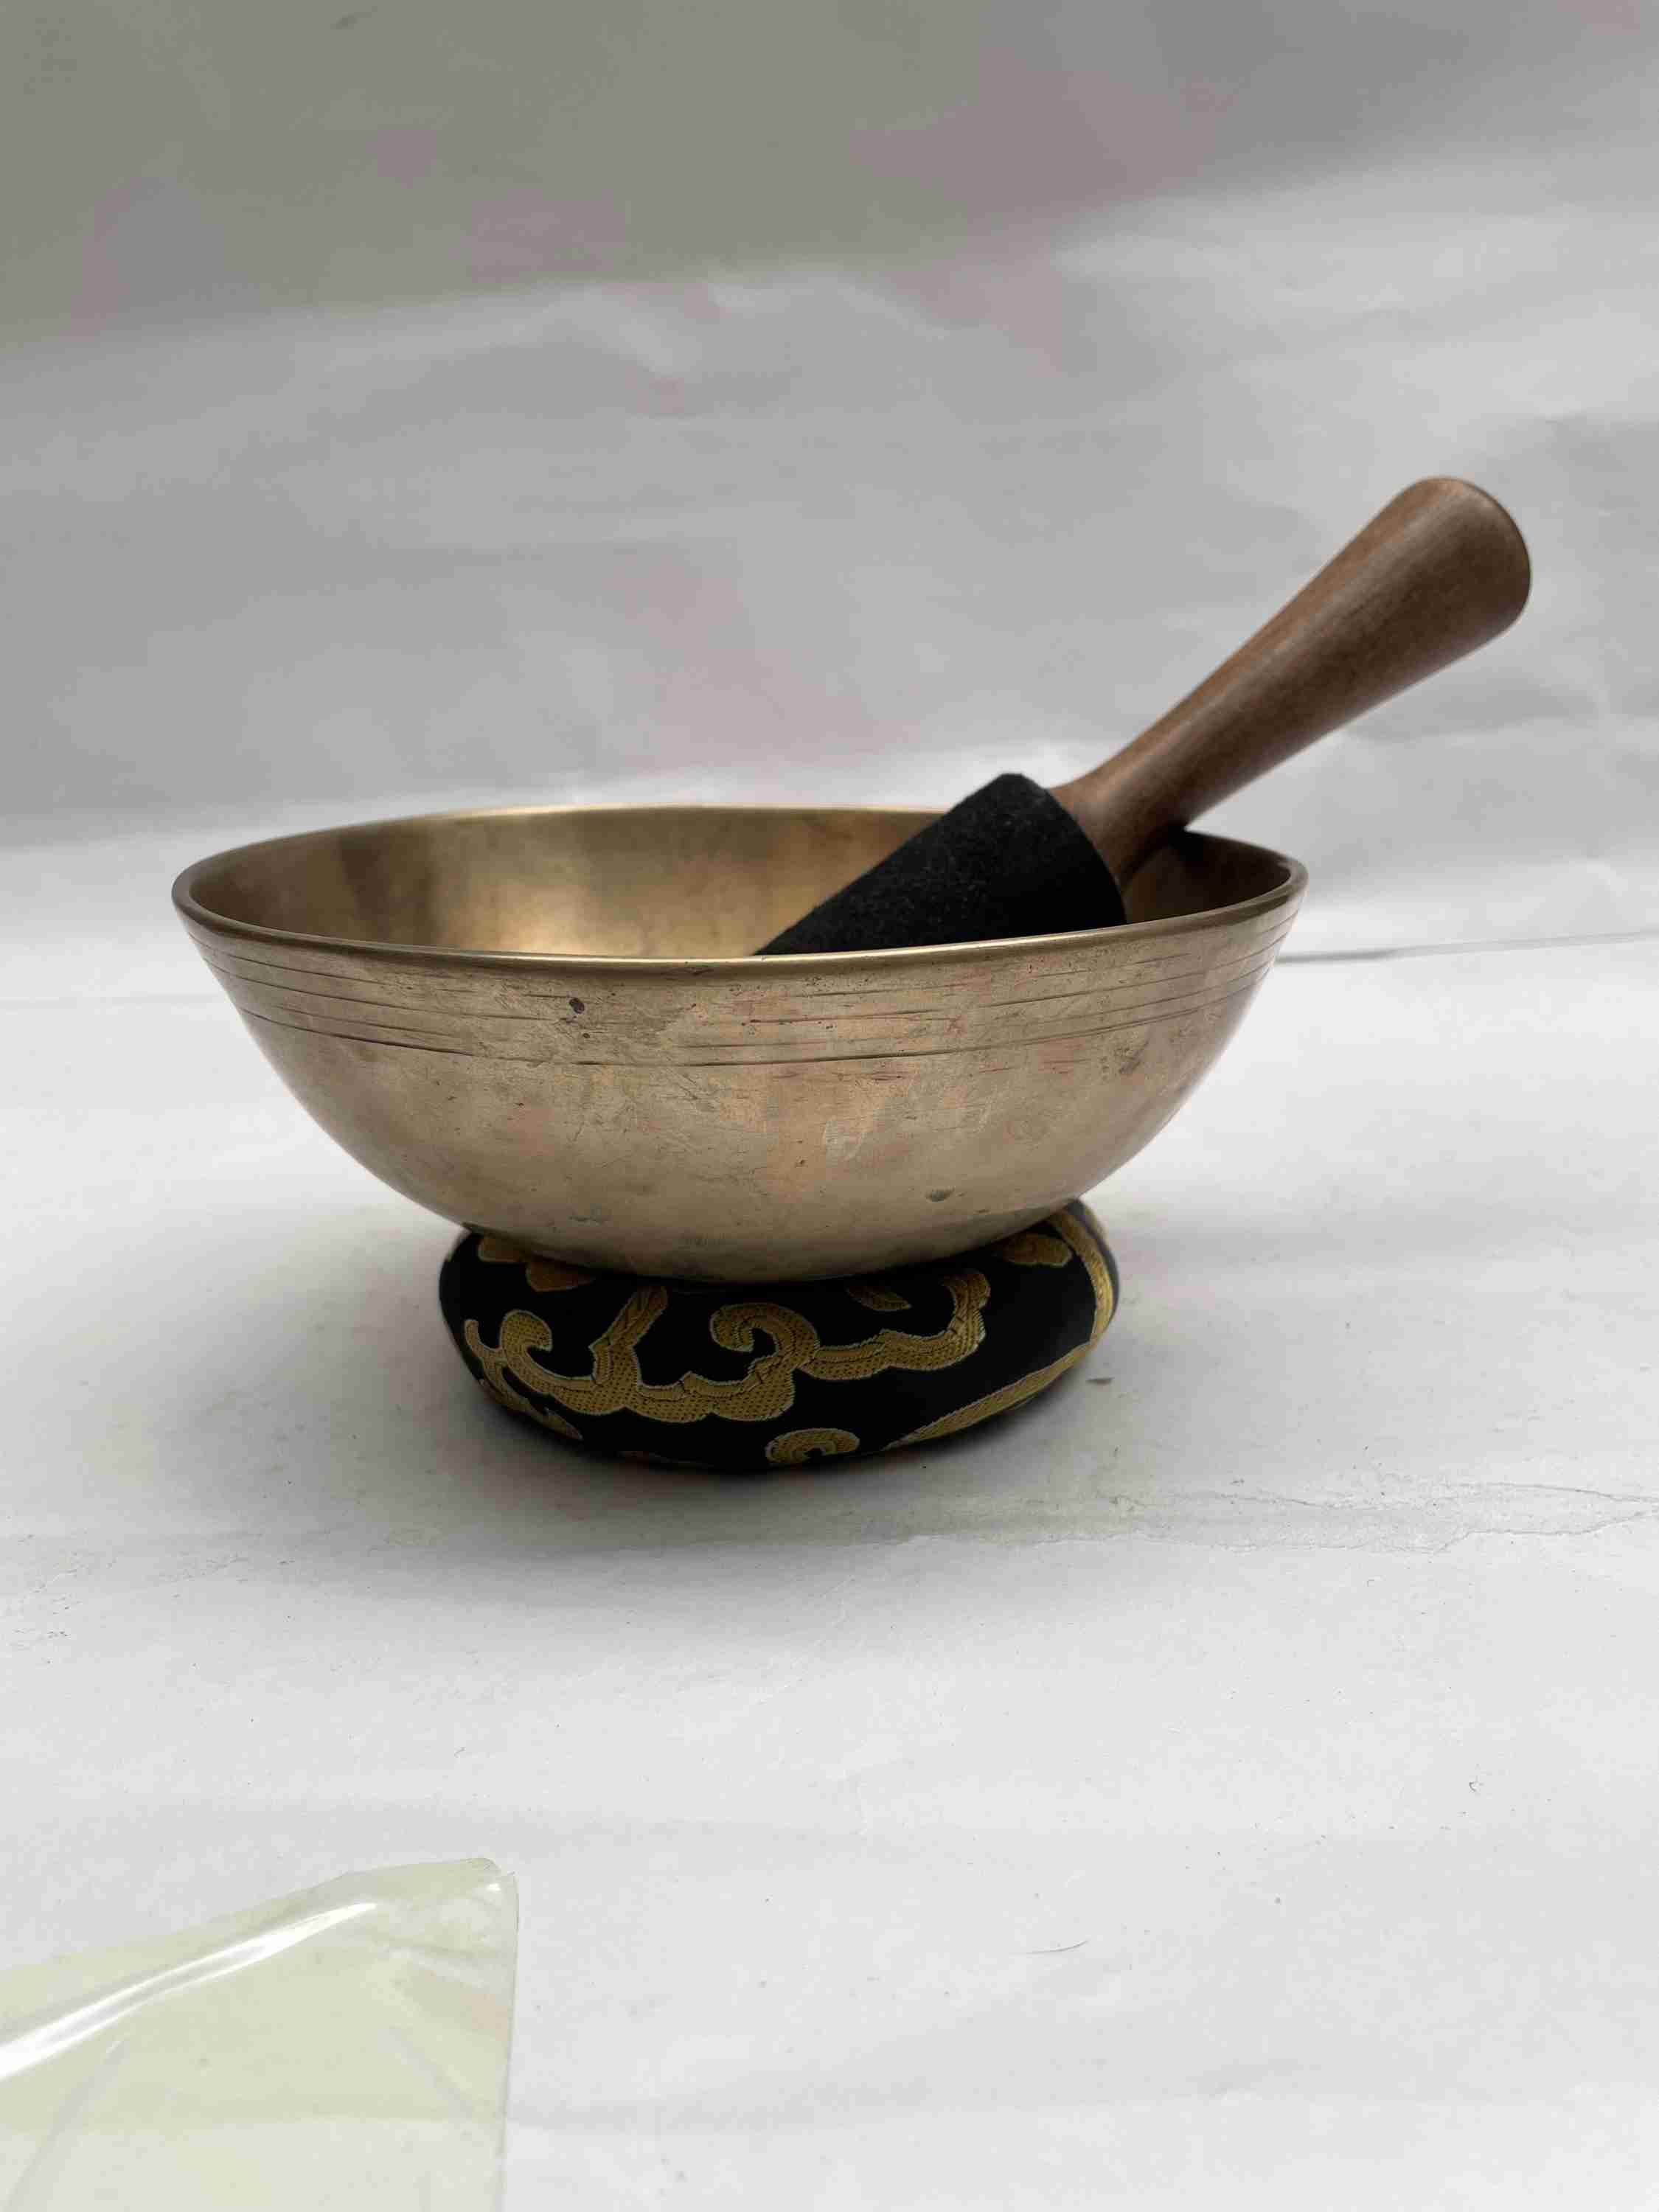 old, Buddhist Hand Beaten manipuri Singing Bowl, With Plain